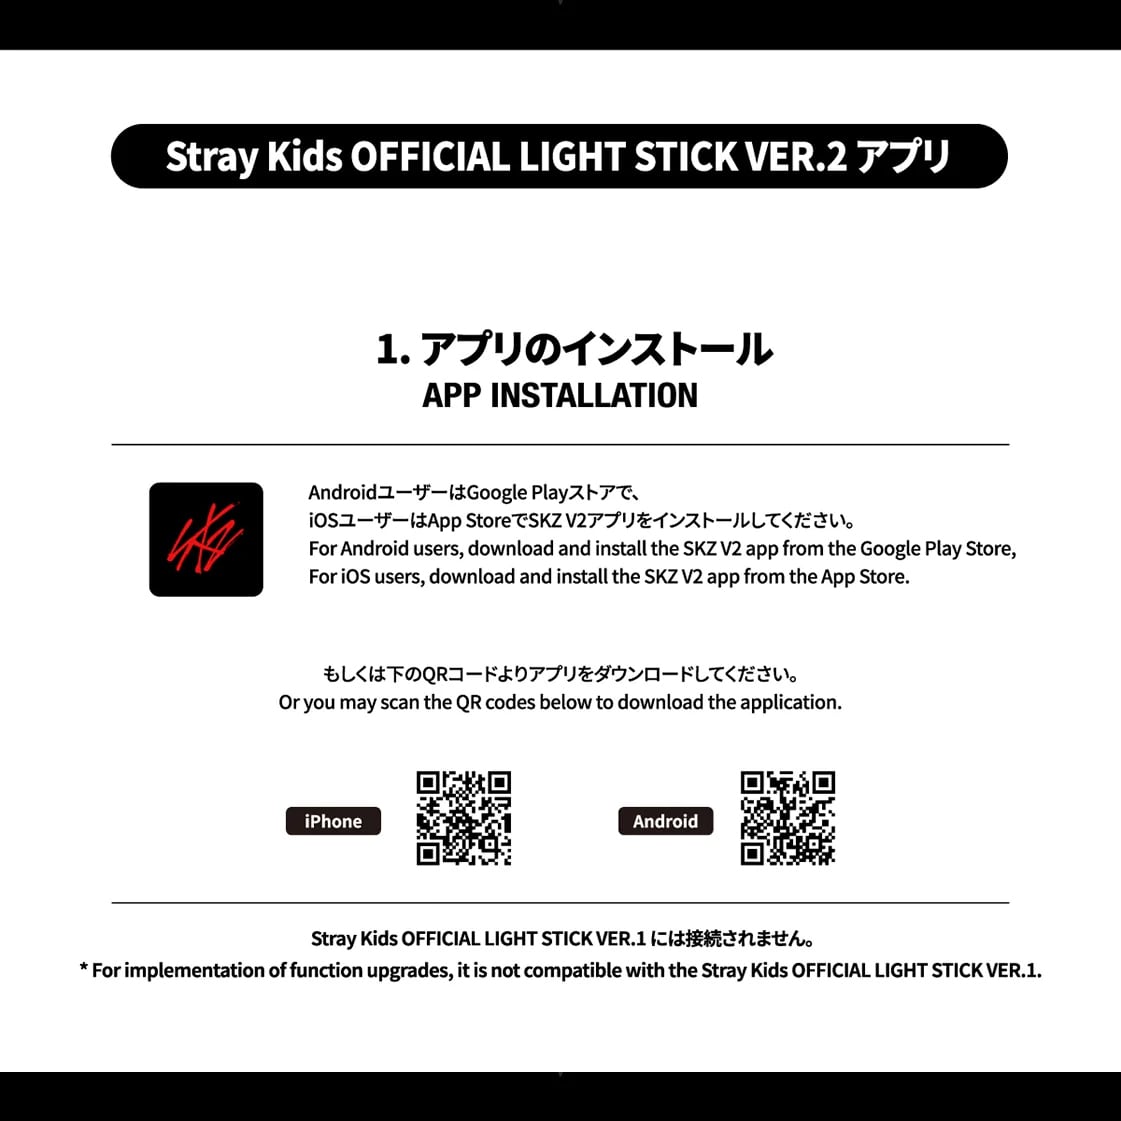 Stray Kids OFFICIAL LIGHT STICK VER.2 2本